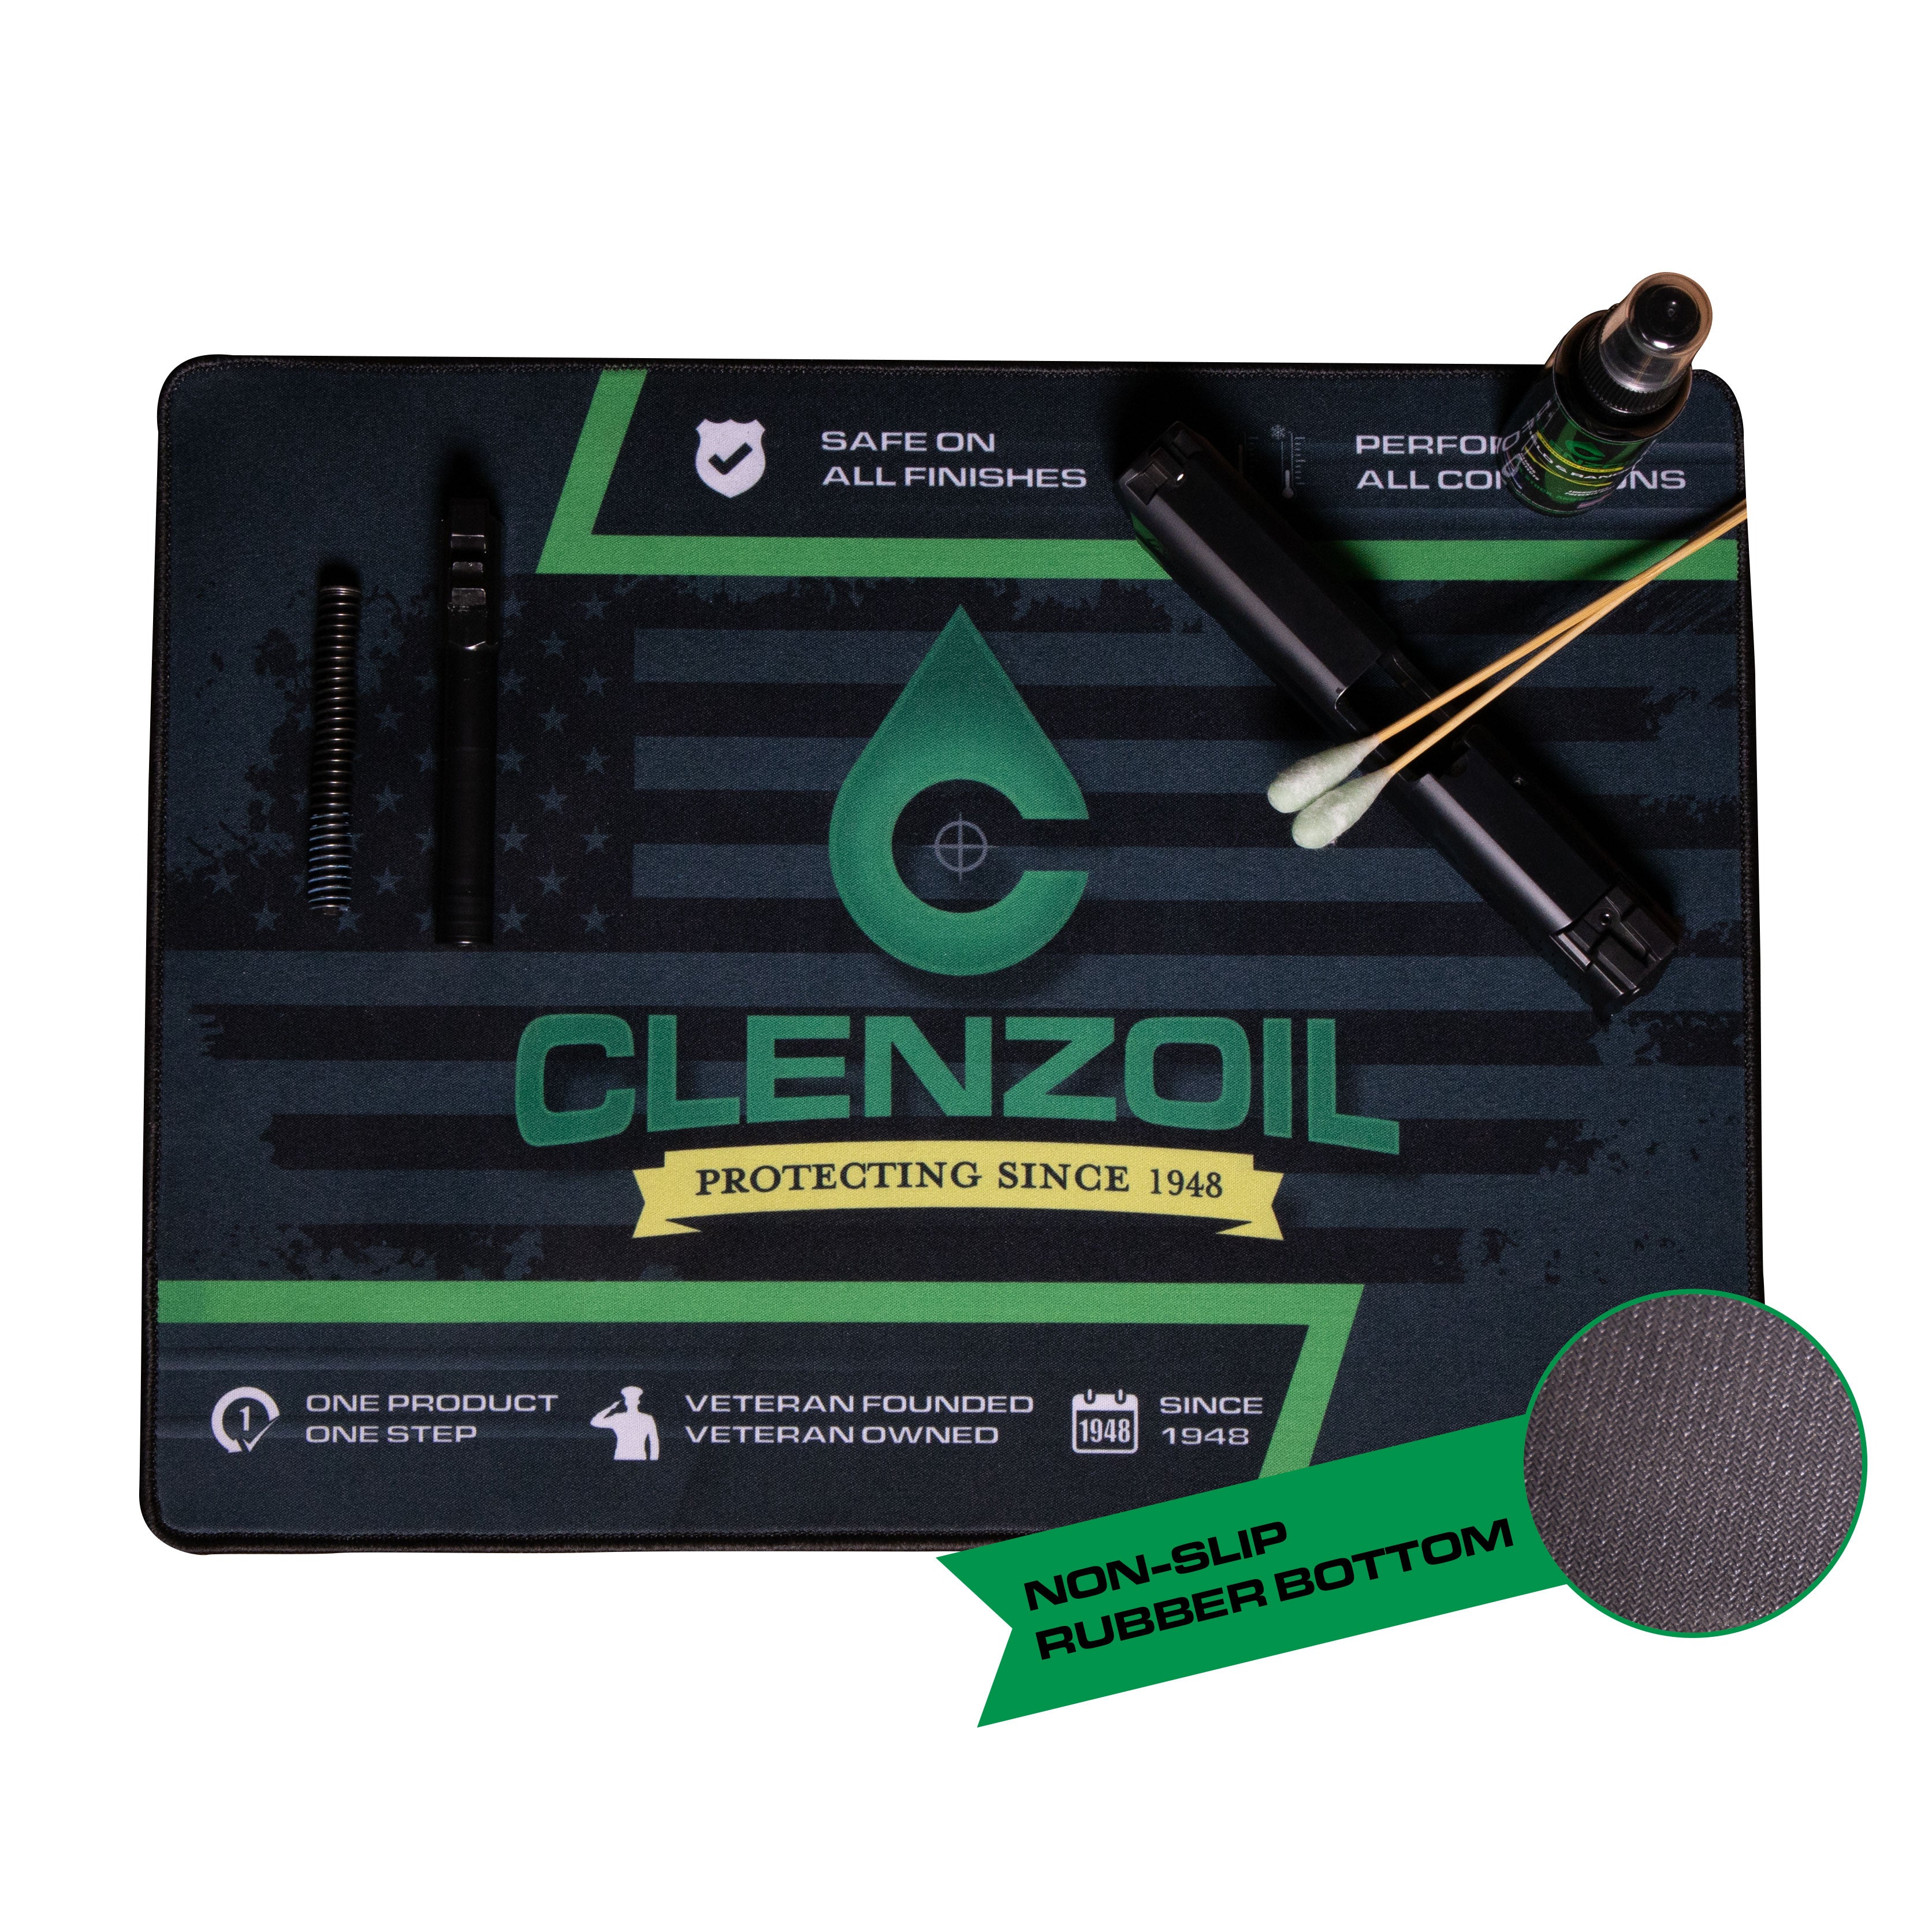 Clenzoil Pistol Cleaning Mat - 17"W x 12"H